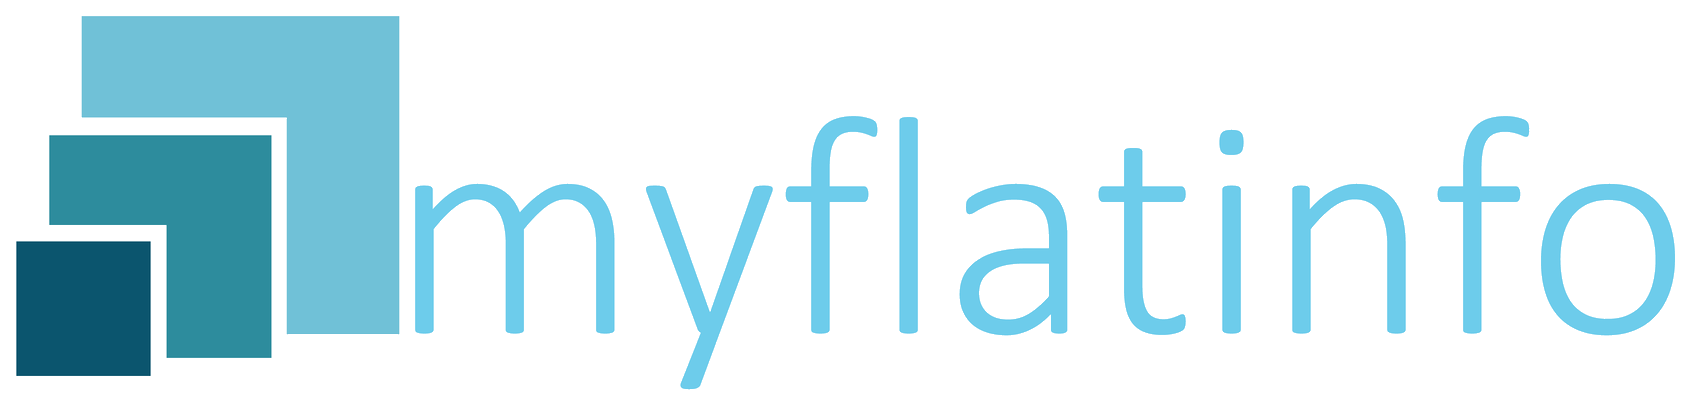 Myflatinfo